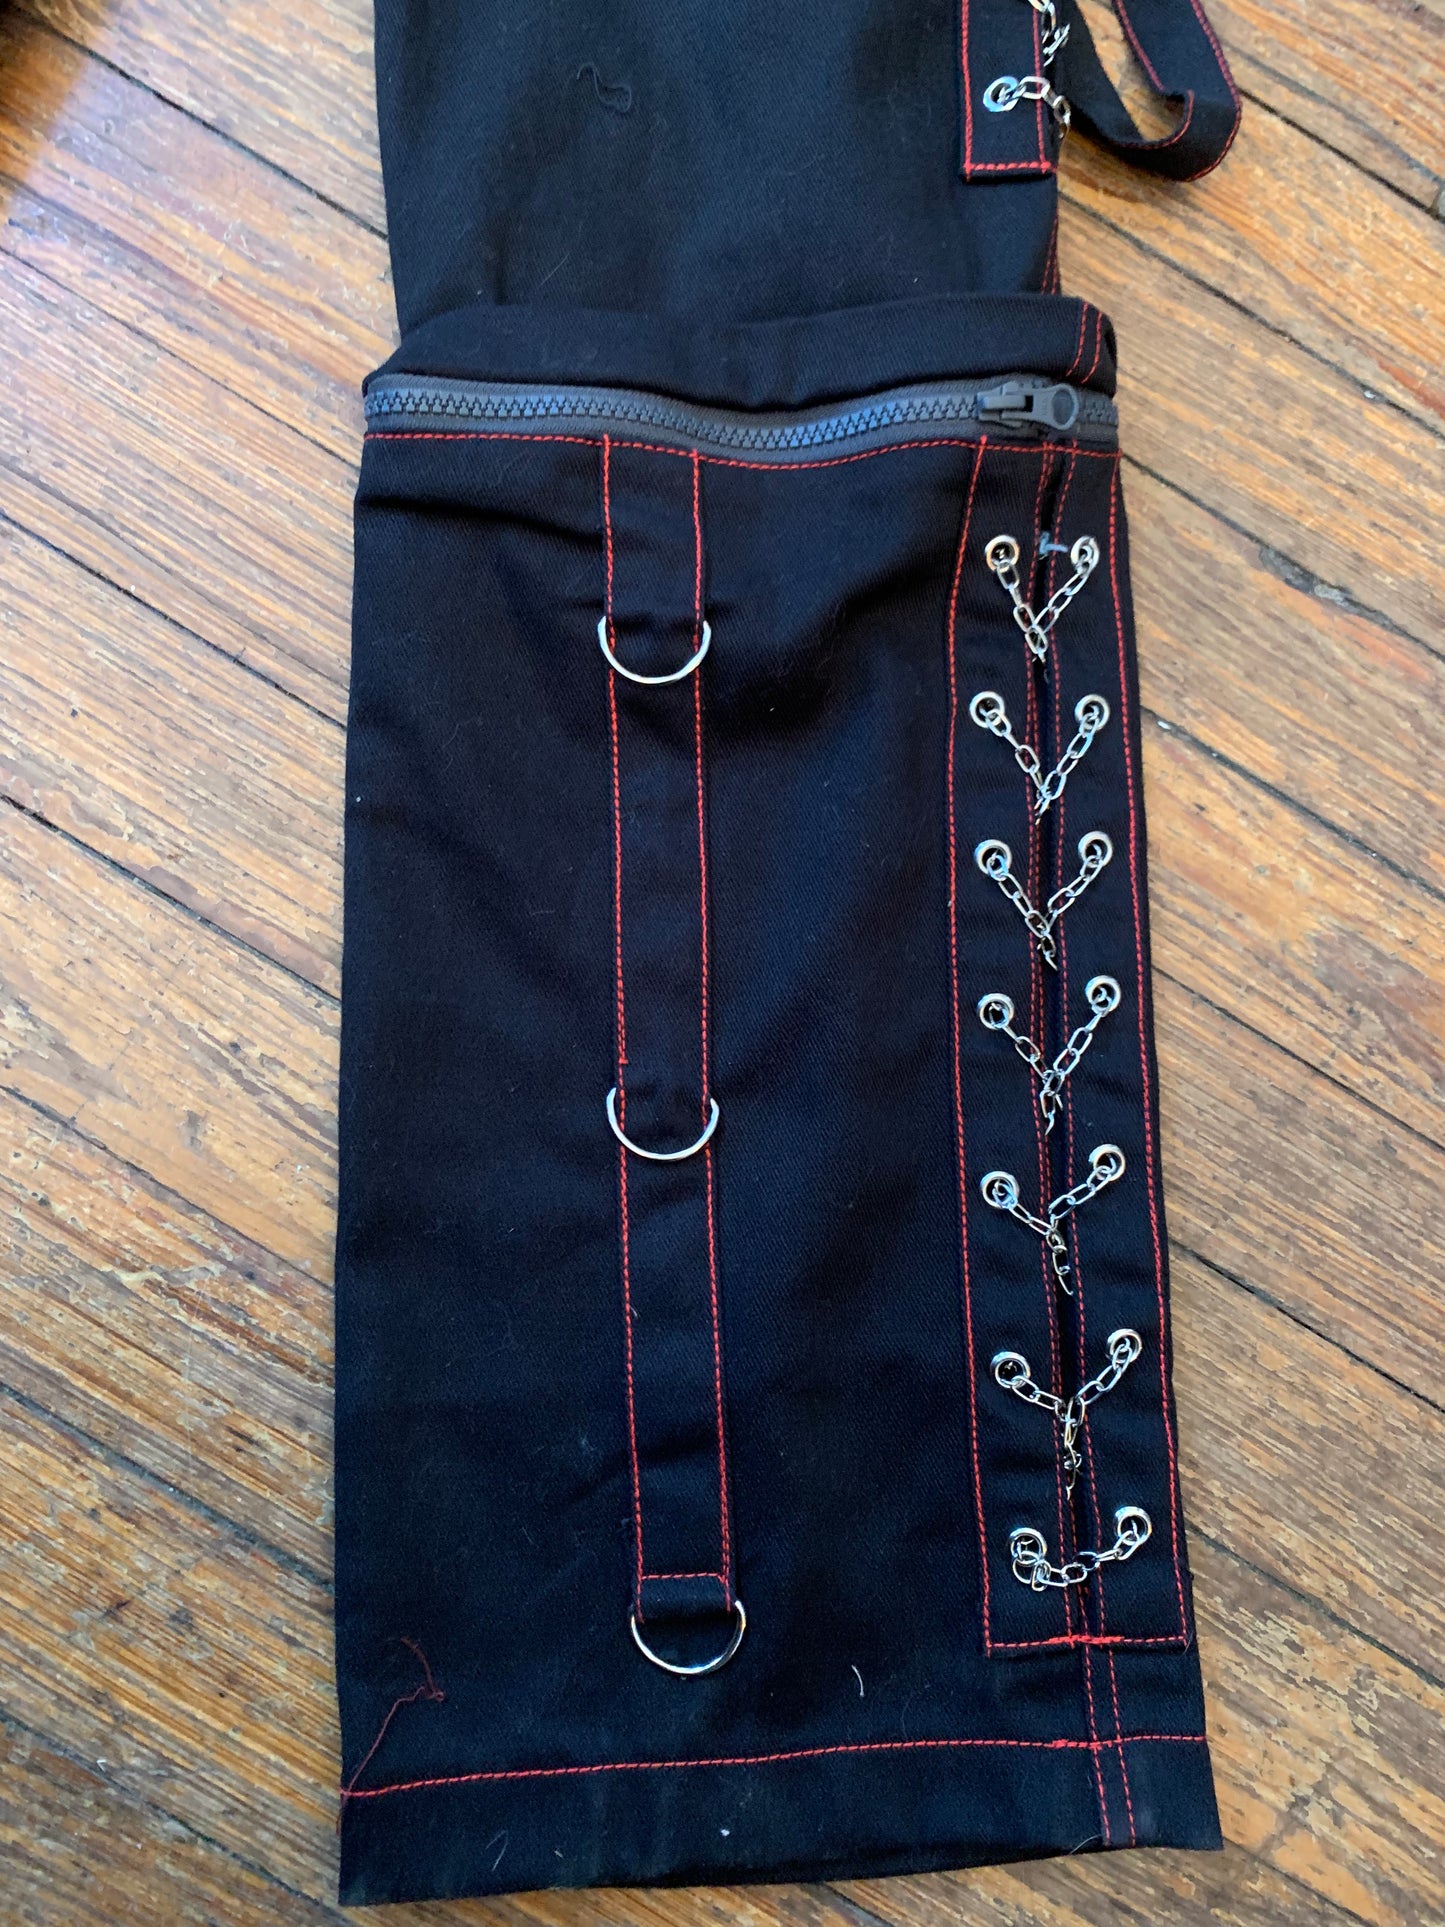 NWOT Dark Rock Black & Red Gothic Bondage Chain Pants